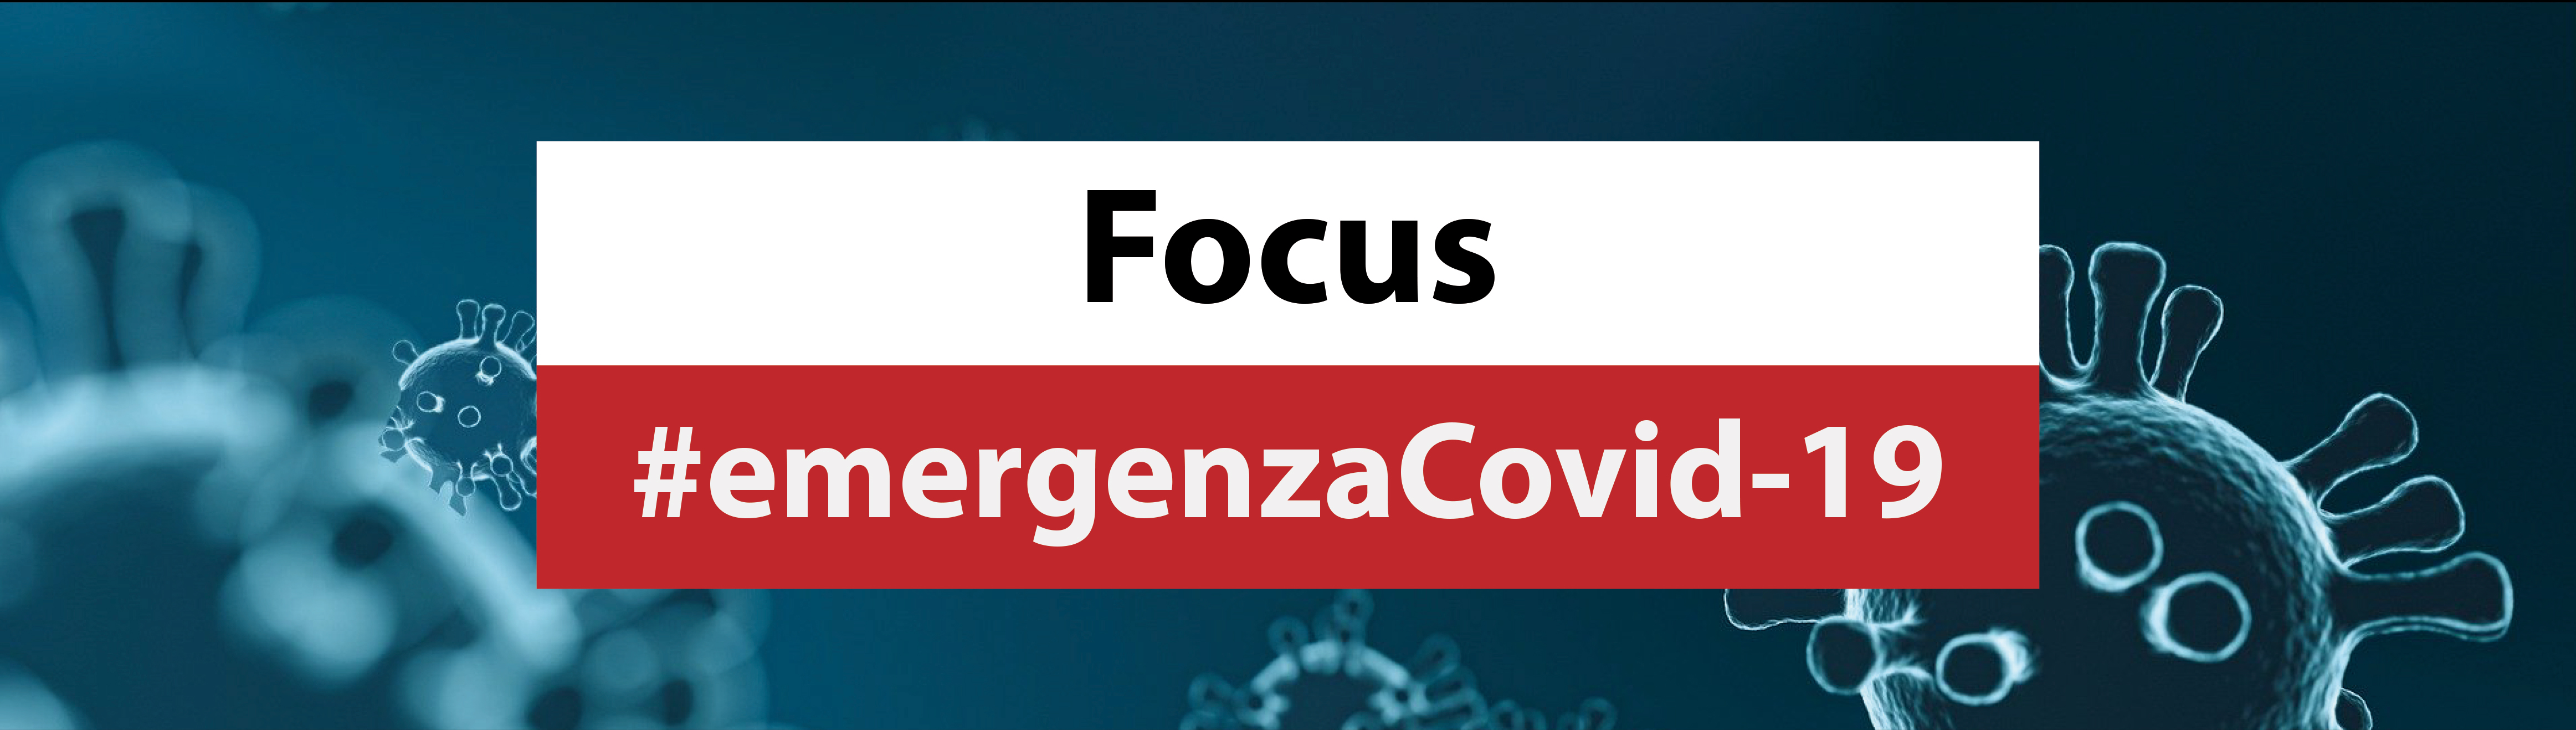 Focus #emergenzaCovid-19